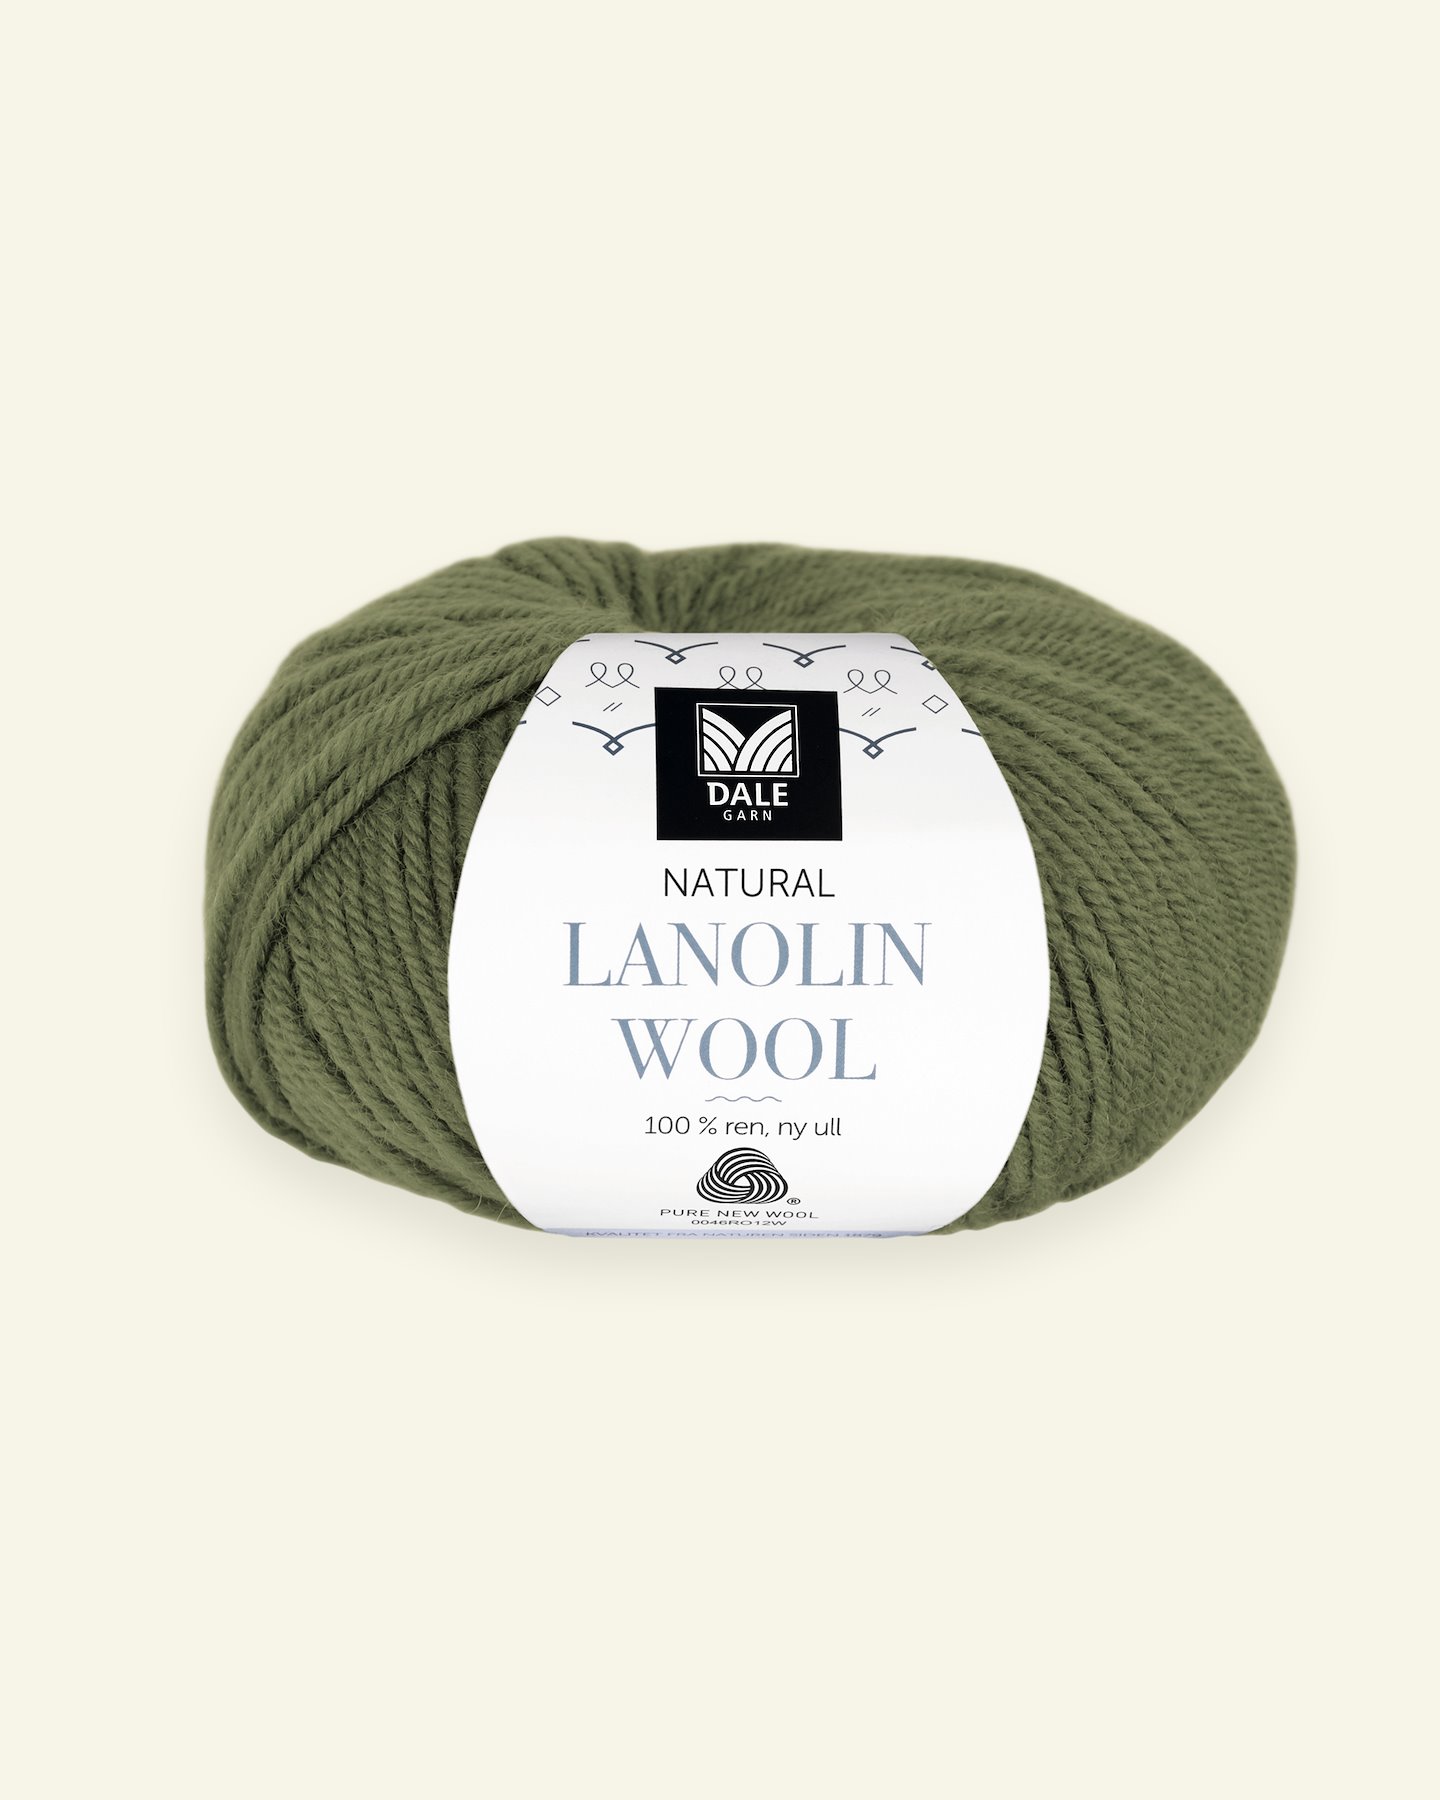 Dale Garn, 100% wool yarn "Lanolin Wool", olive 90000291_pack